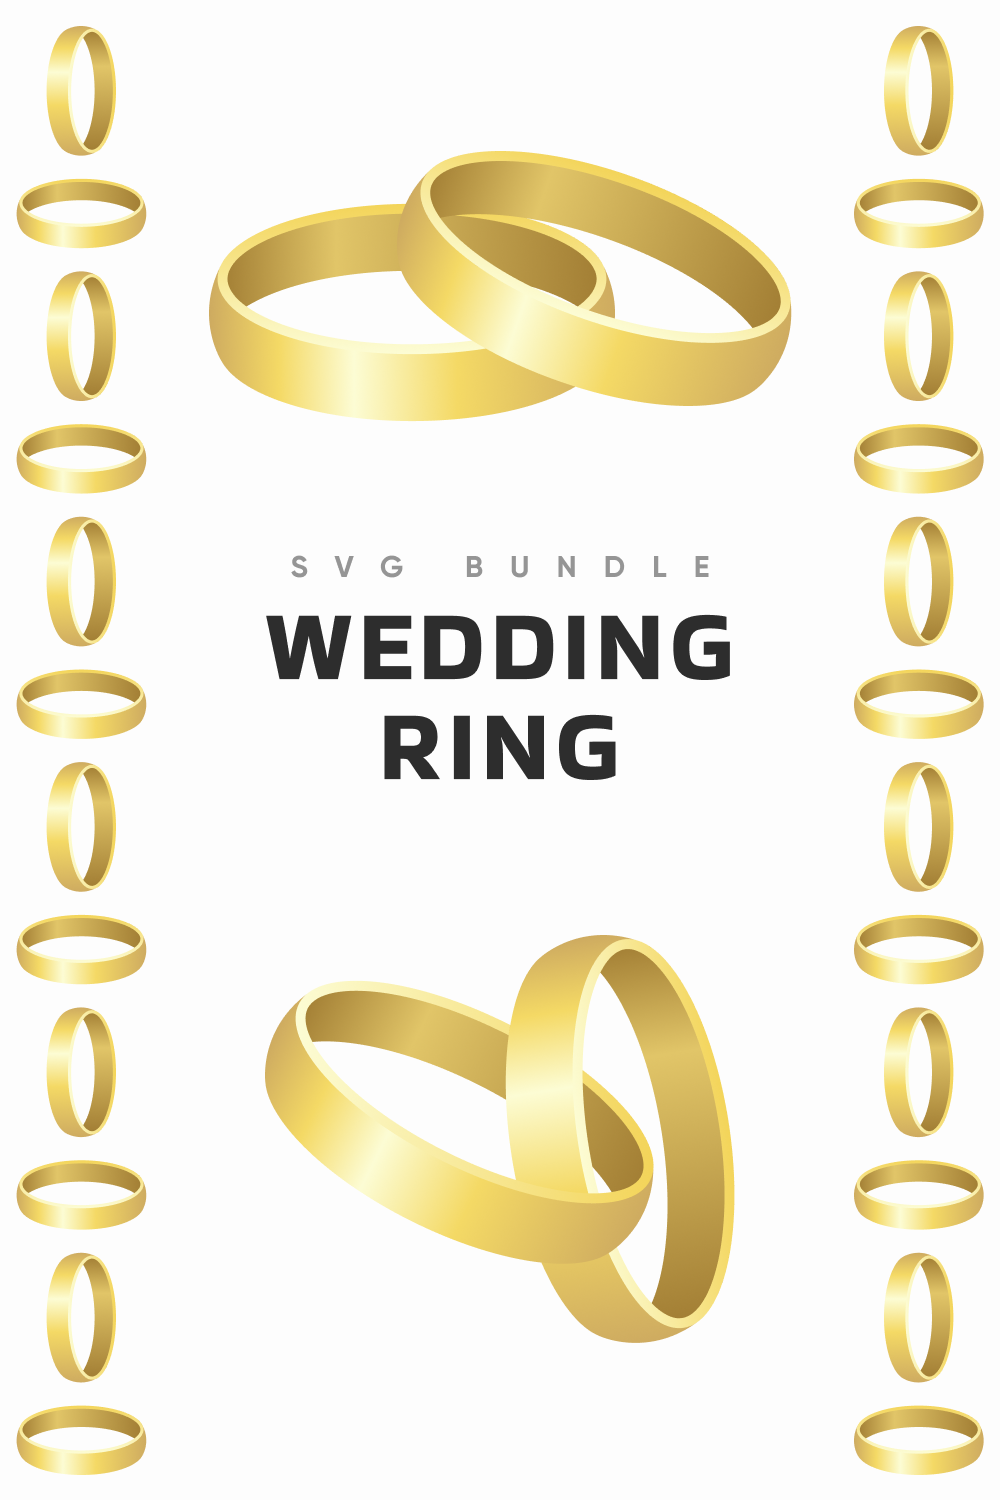 wedding ring svg bundle pinterest image.